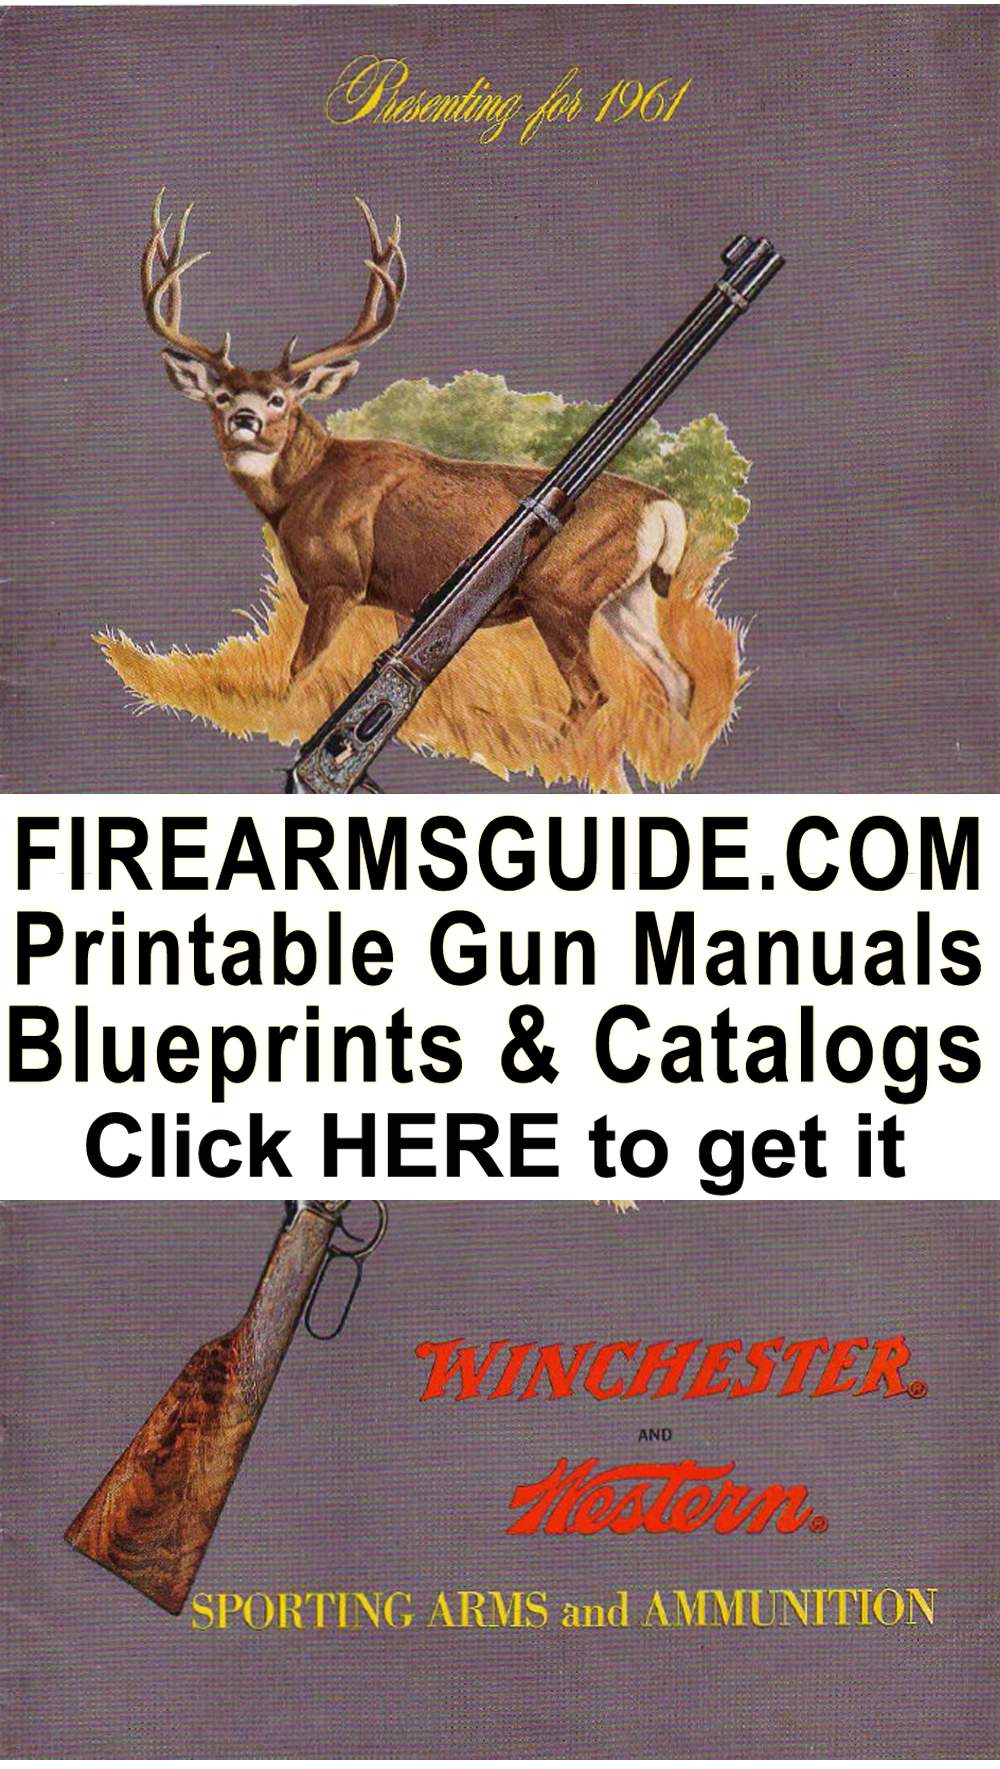 Franchi c.1961 Shotguns Catalog 